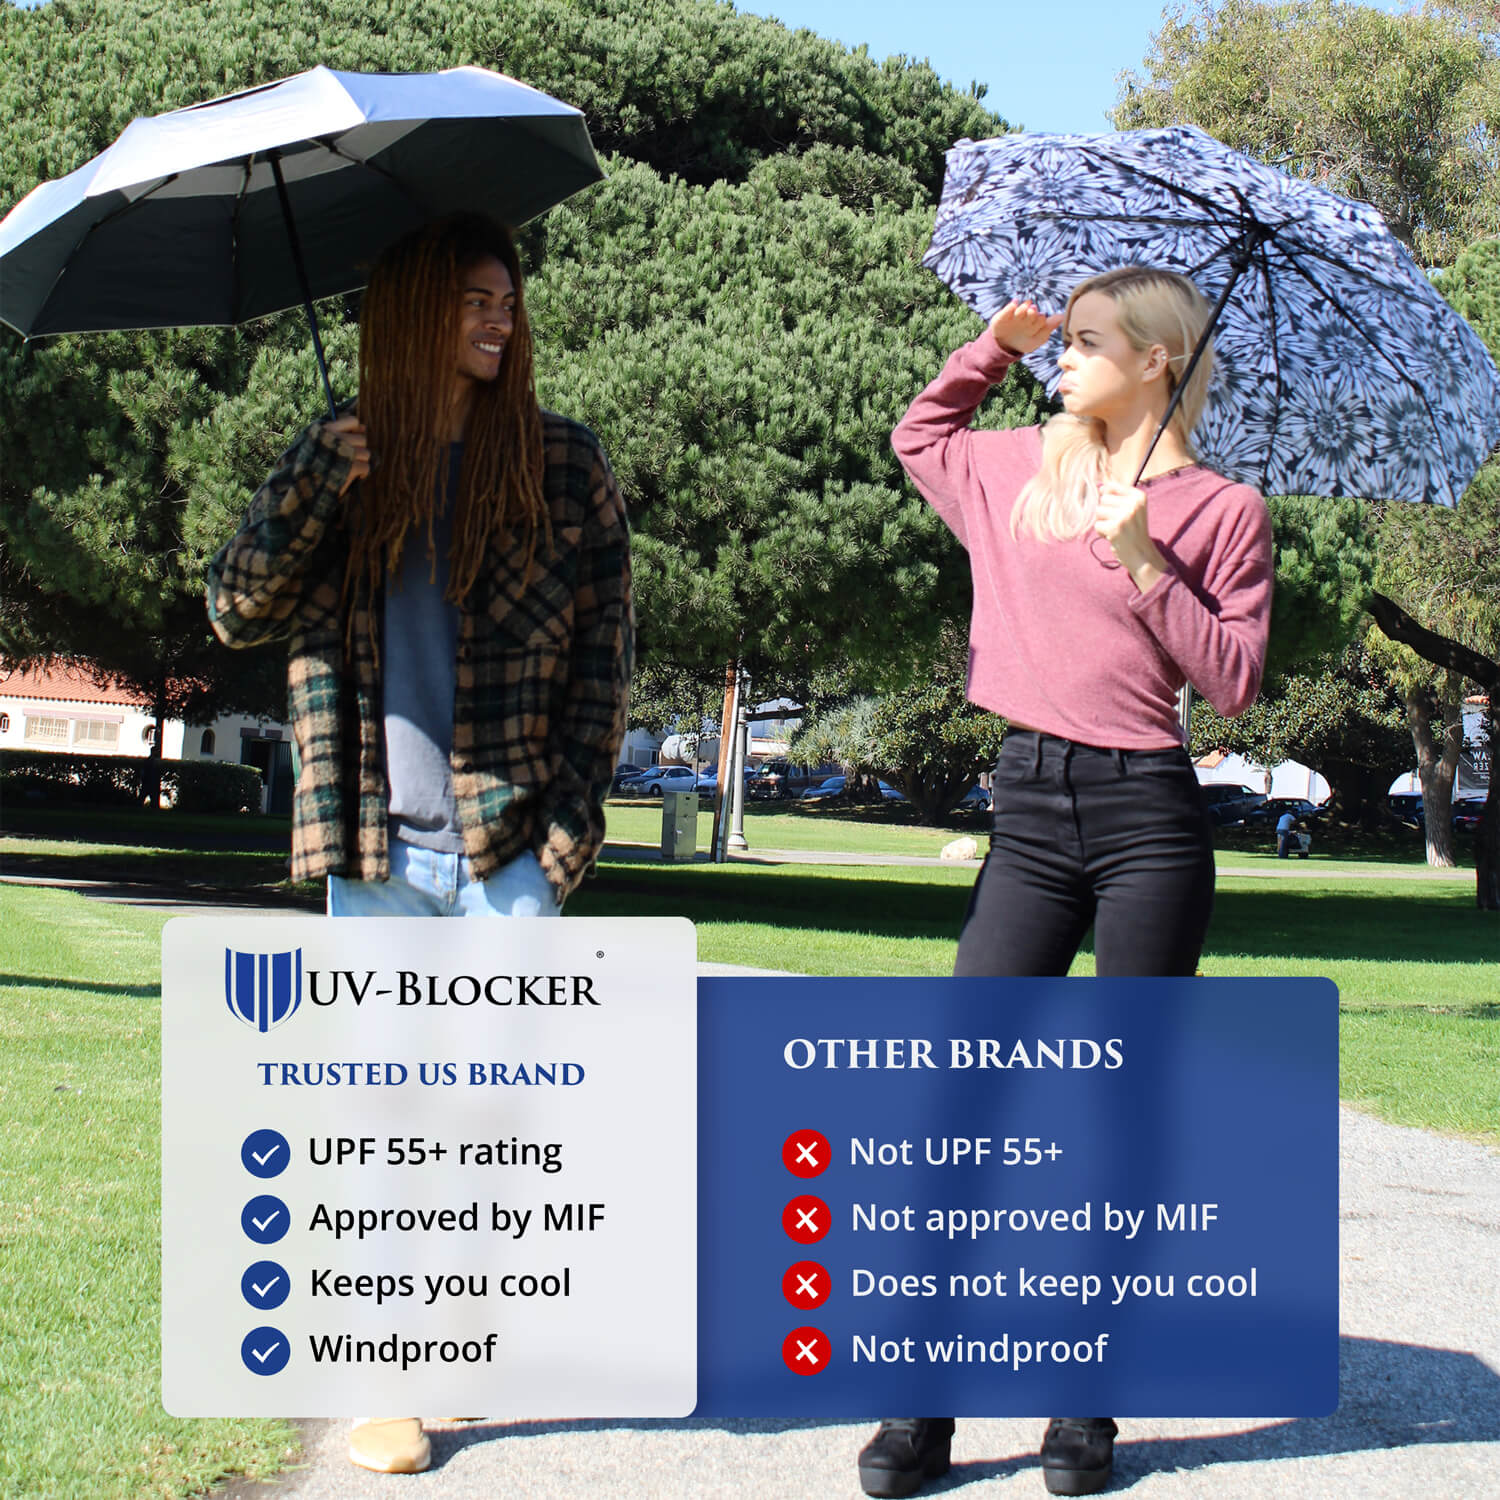 UV-Blocker Sun Umbrella is the #1 Trusted Brand